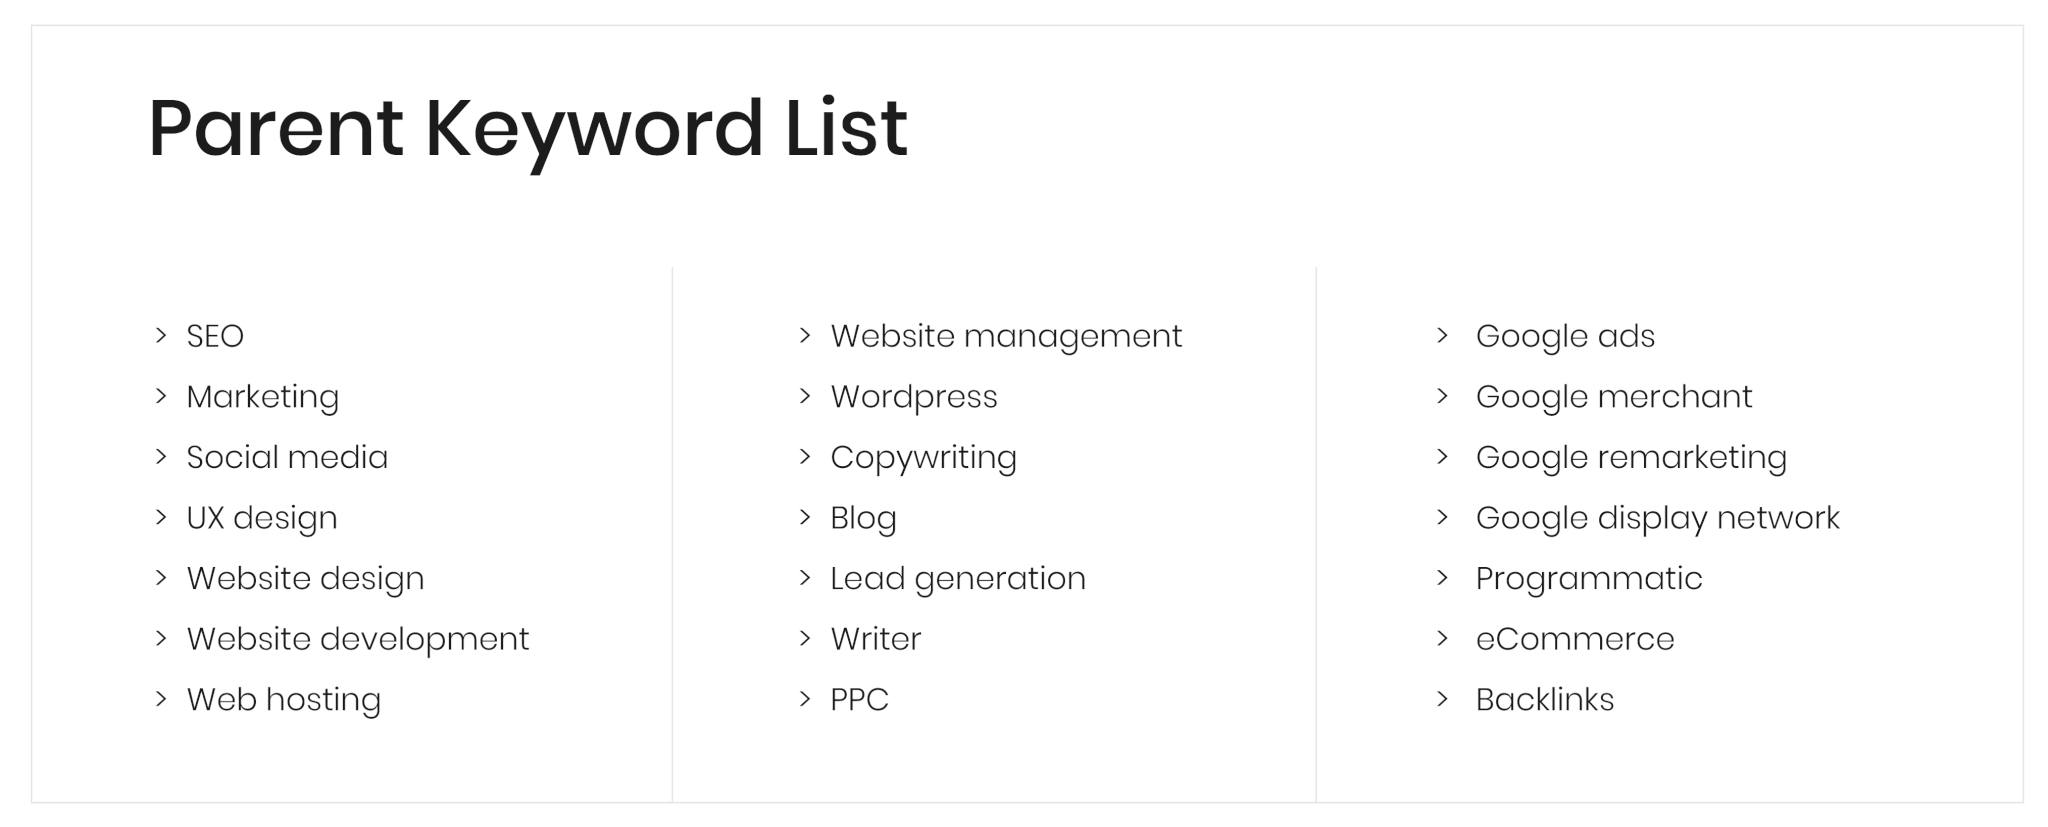 Parent Keyword List 